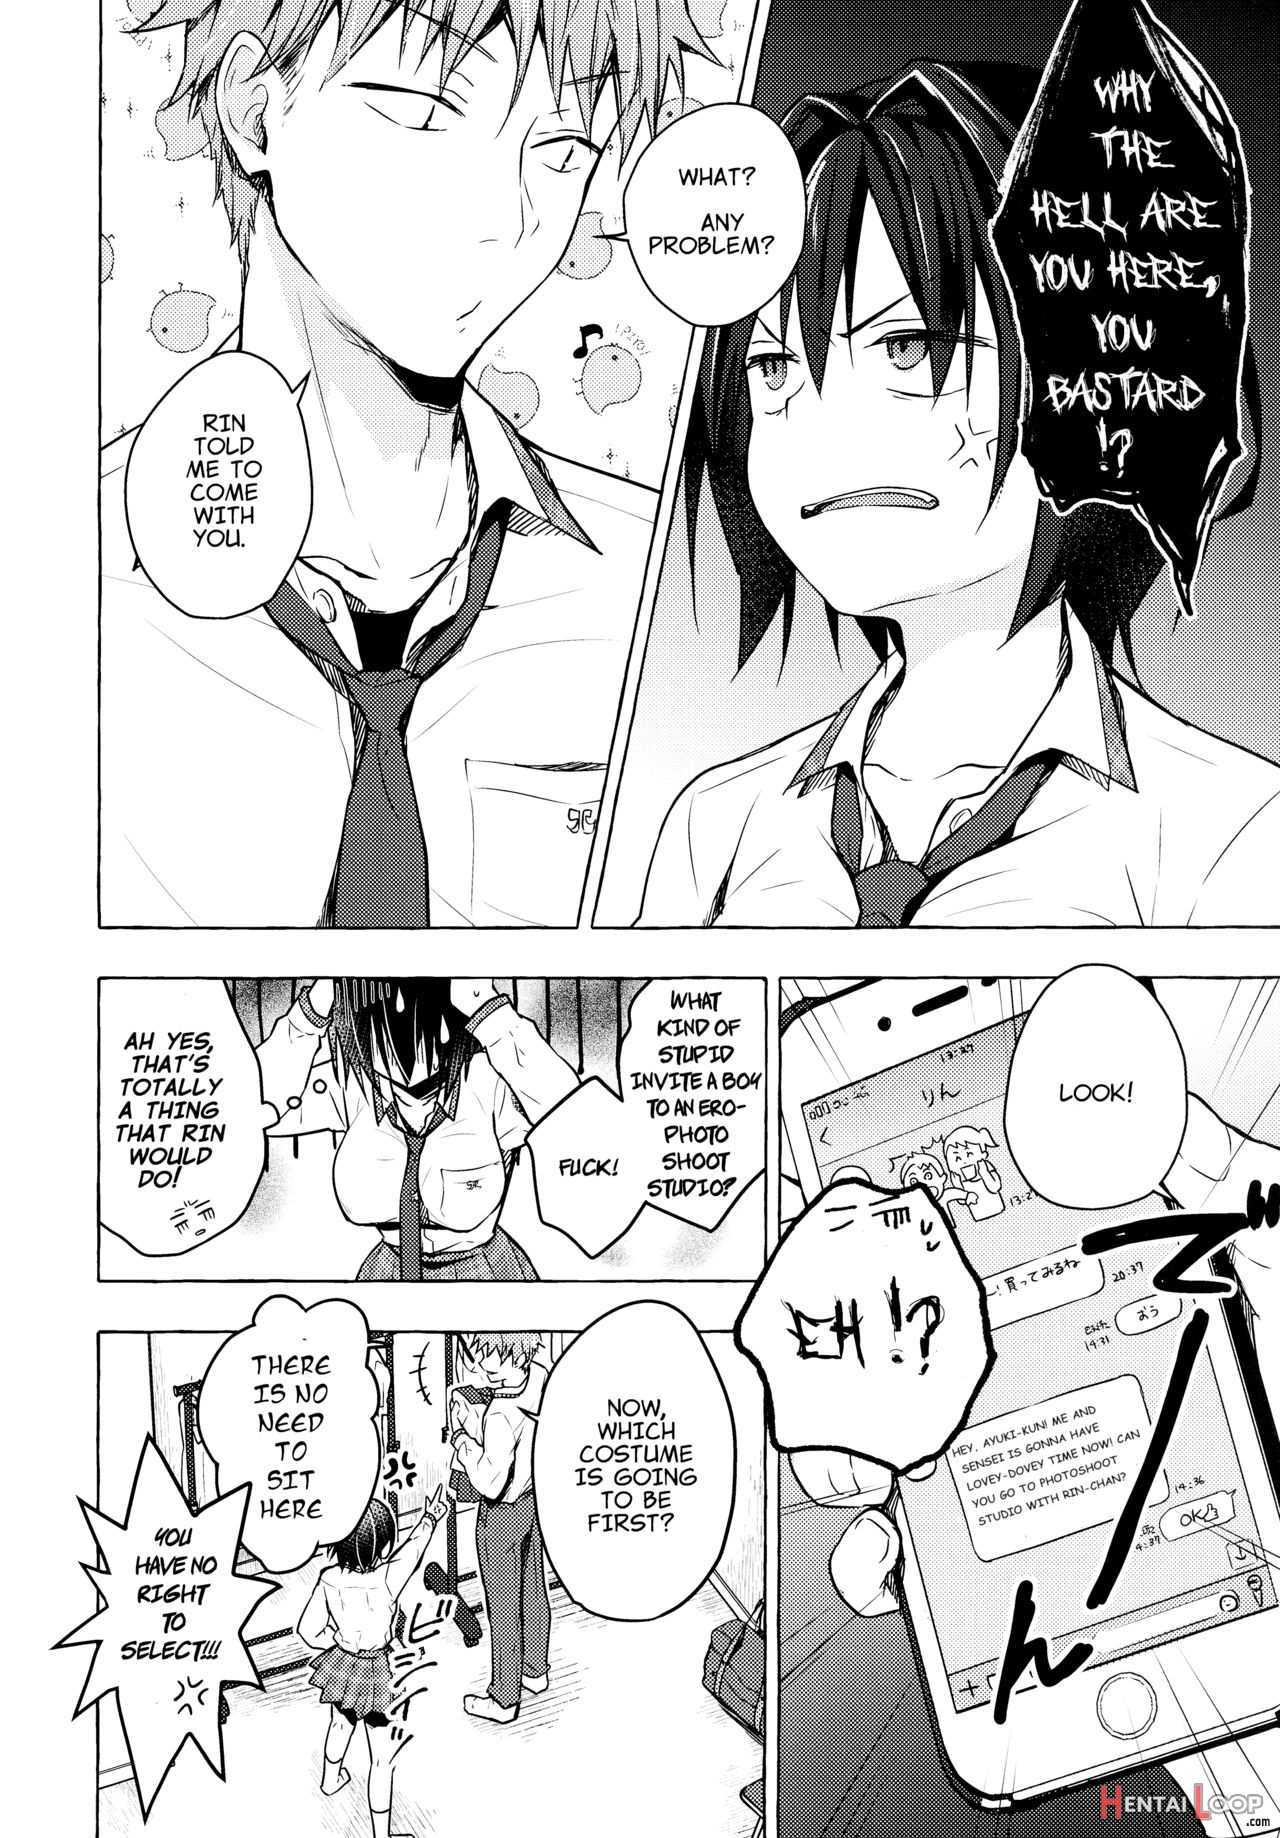 Akira-kun's Sex Life 4 page 7